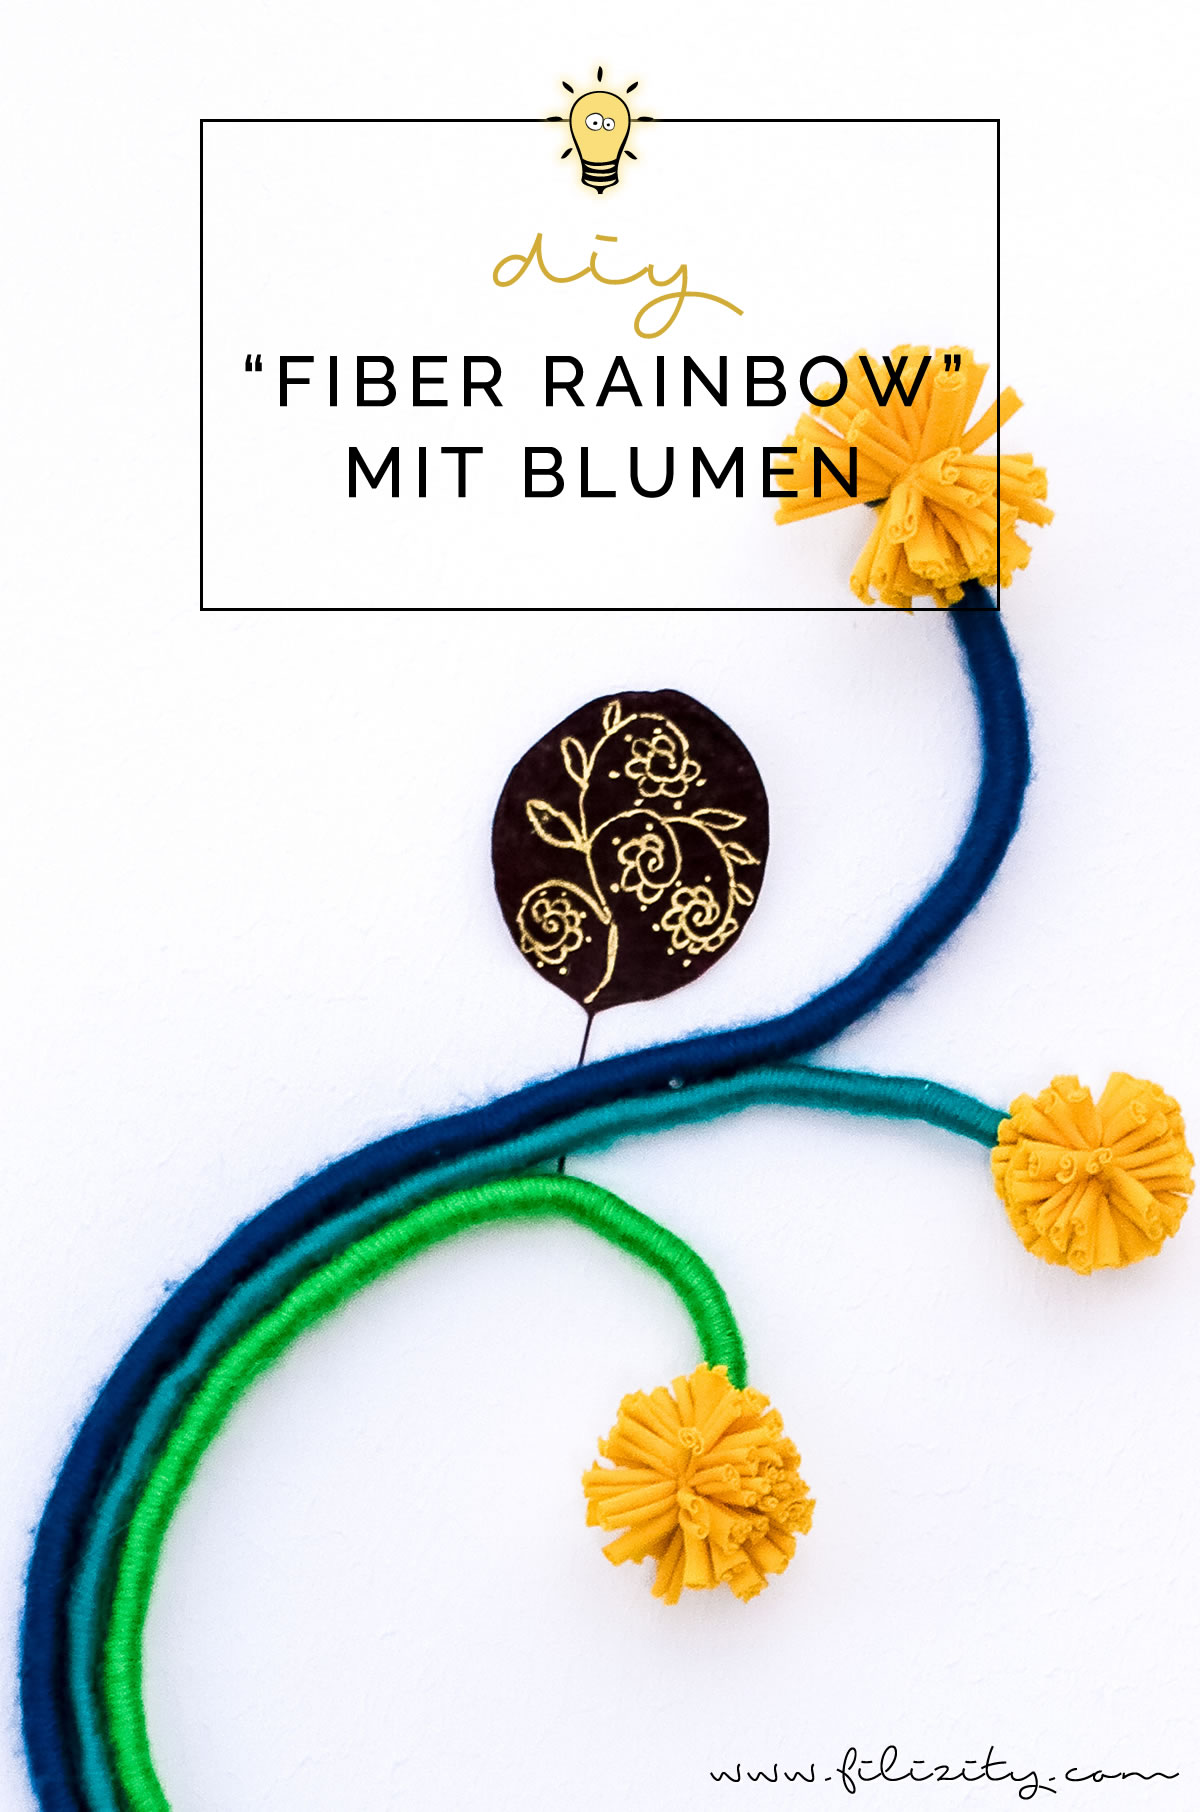 DIY Wanddeko im Fiber Rainbow Stil selber machen | Filizity.com | DIY-Blog aus dem Rheinland #fiberrainbow #rainbow #regenbogen #wolle #frühling